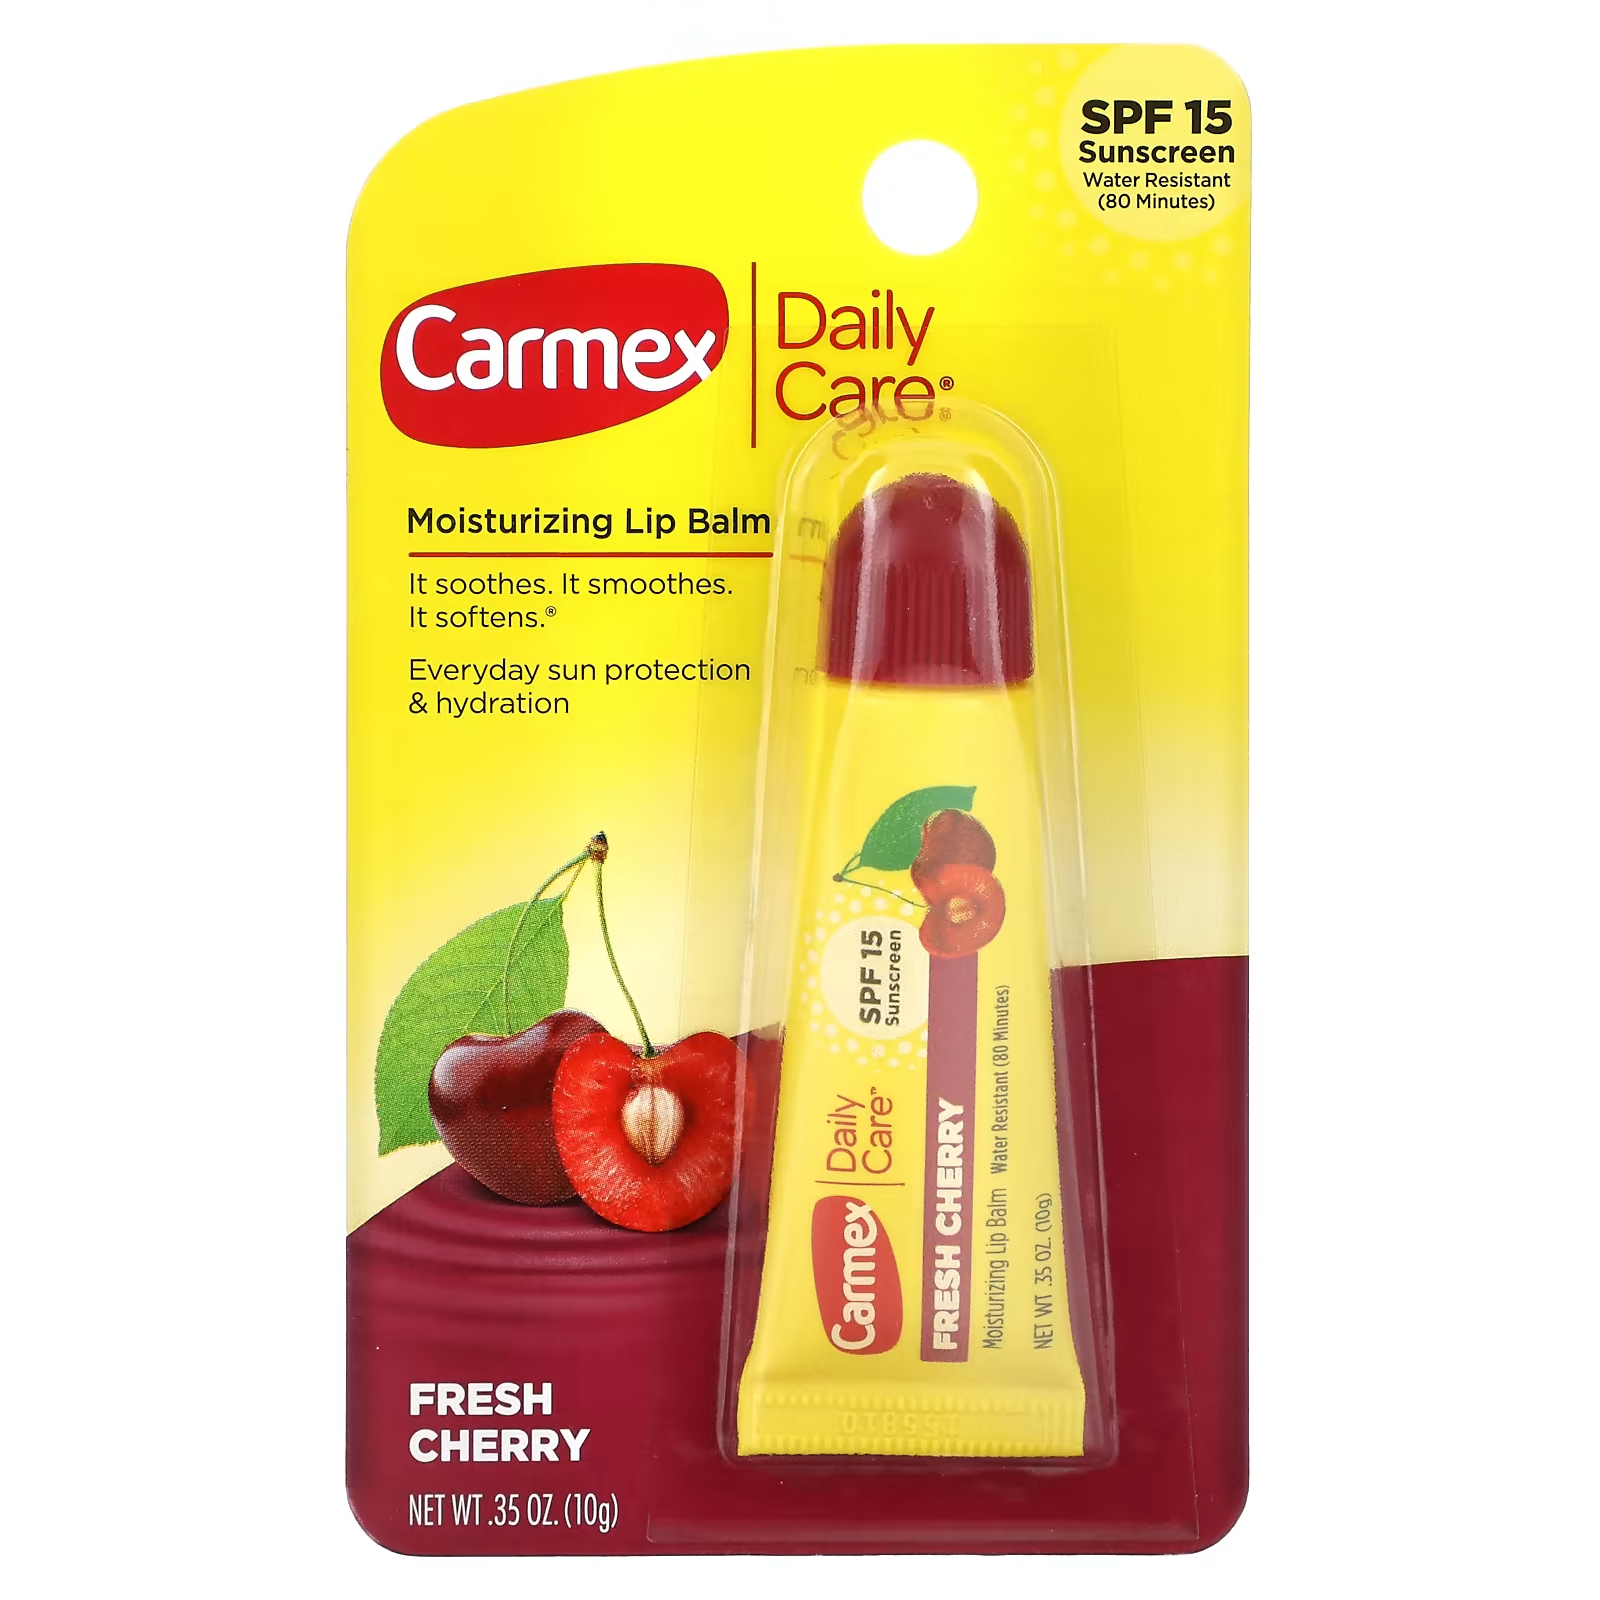 Бльзам увлажняющий для губ Carmex Daily Care SPF 15 свежая вишня, 10 г carmex daily care увлажняющий бальзам для губ вишня spf 15 набор 2 шт по 10 г